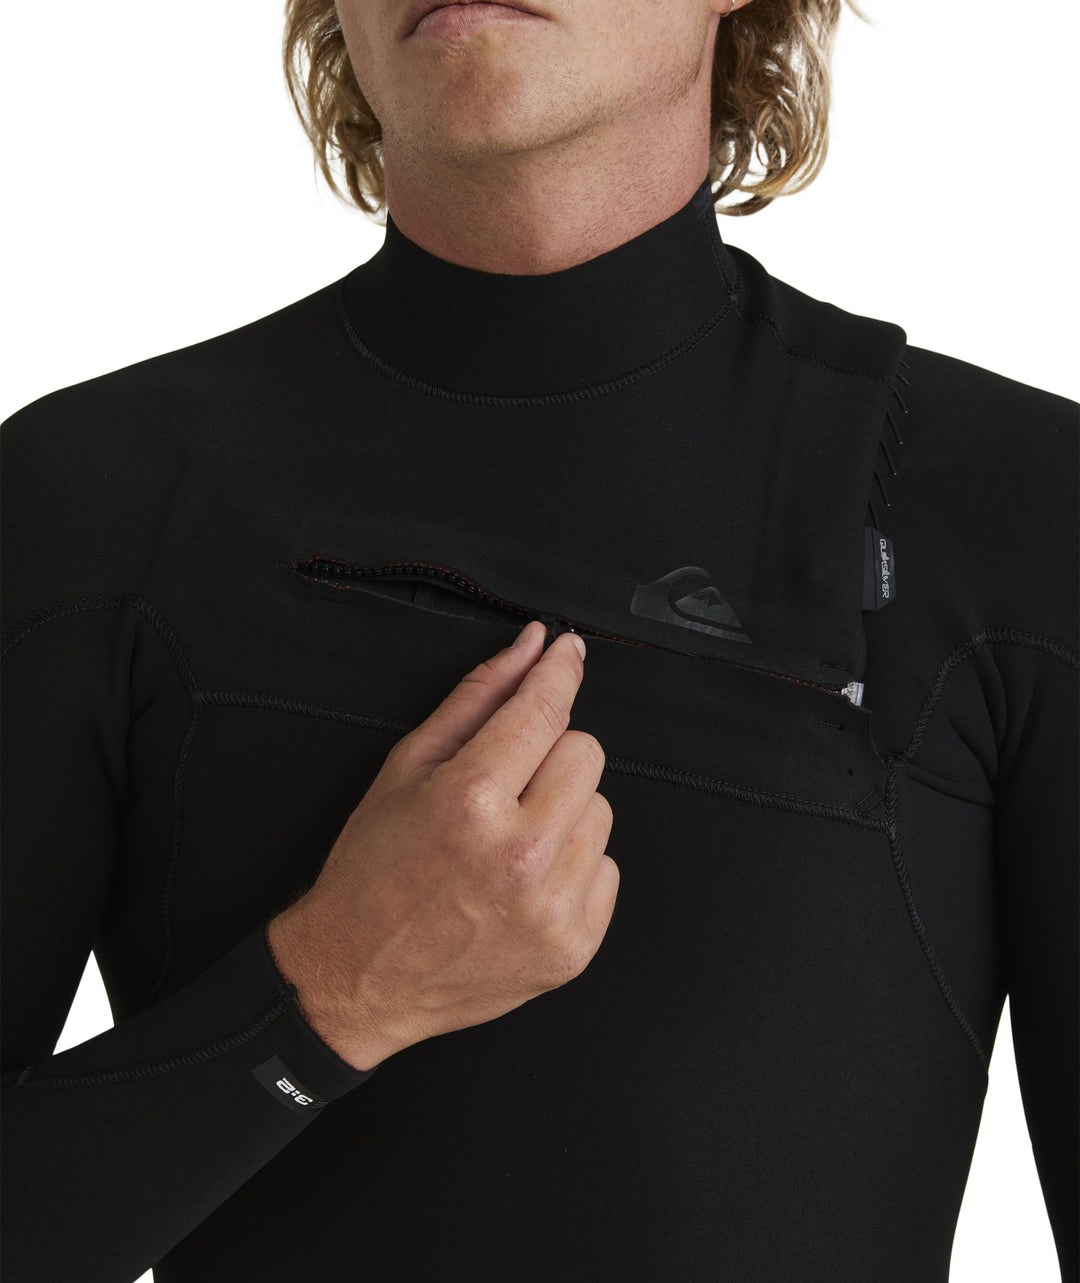 Highline 3/2 Chest Zip Steamer Wetsuit - Black